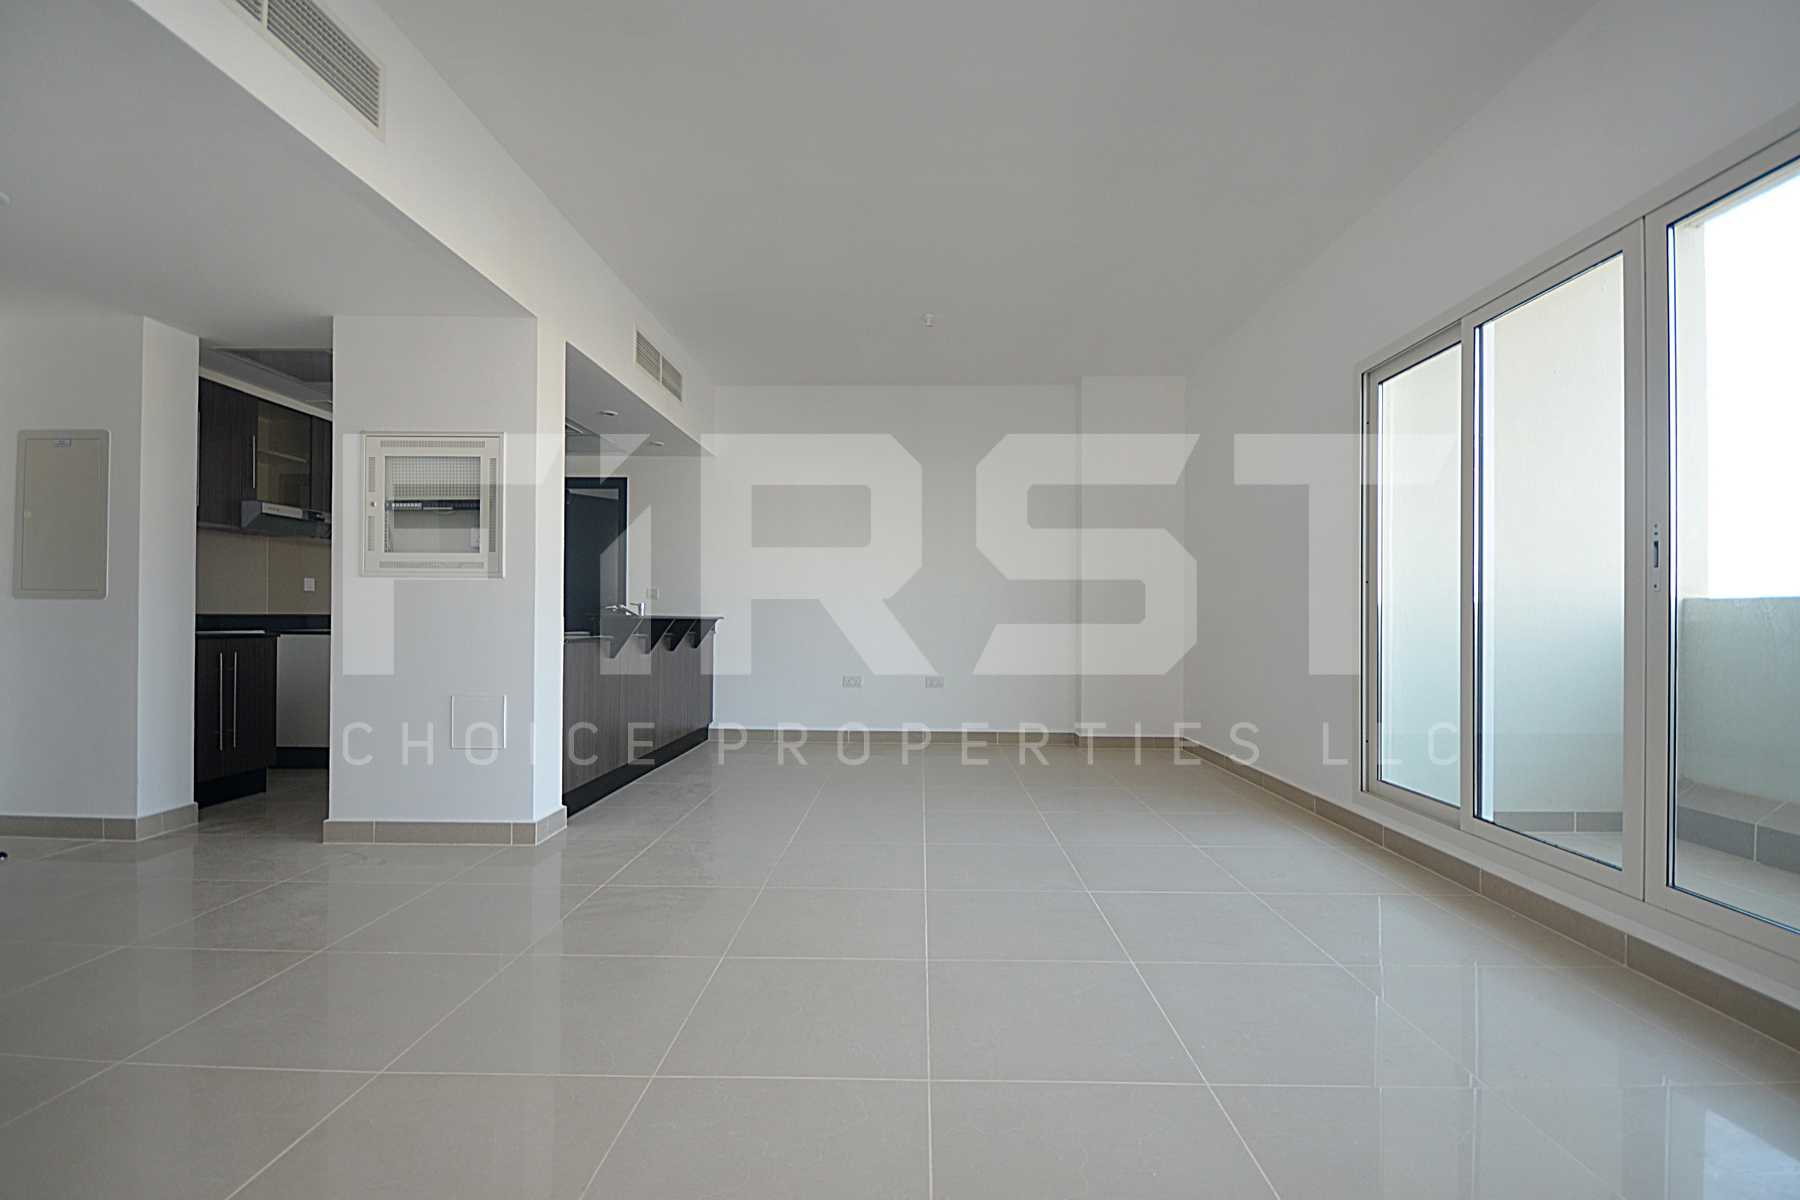 Internal Photo of 3 Bedroom Apartment Type D Open Kitchen in Al Reef Downtown Al Reef Abu Dhabi UAE 145sq.m 1560 sq.ft (1).jpg